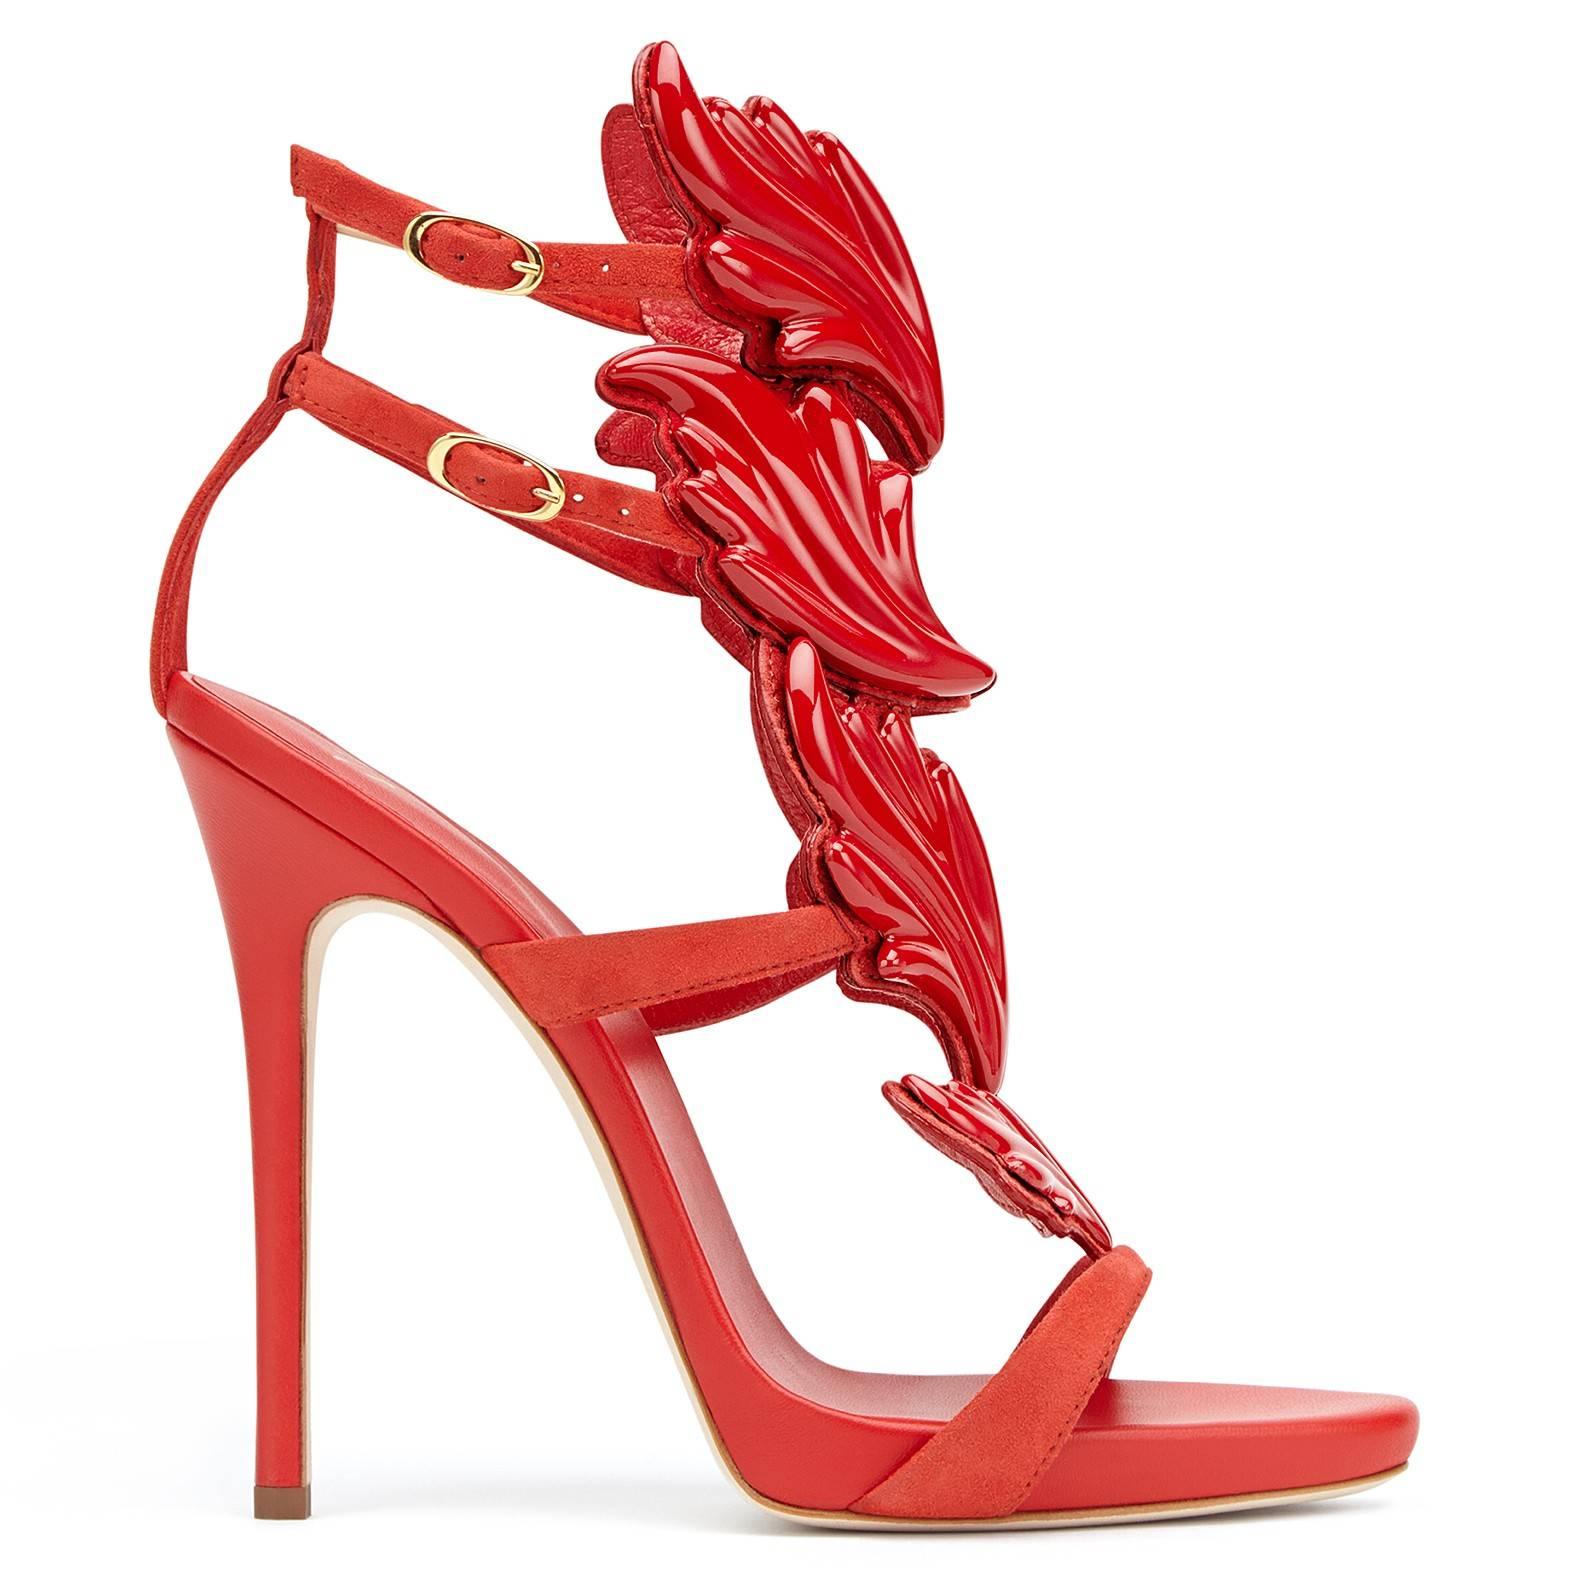 red strappy sandals heels